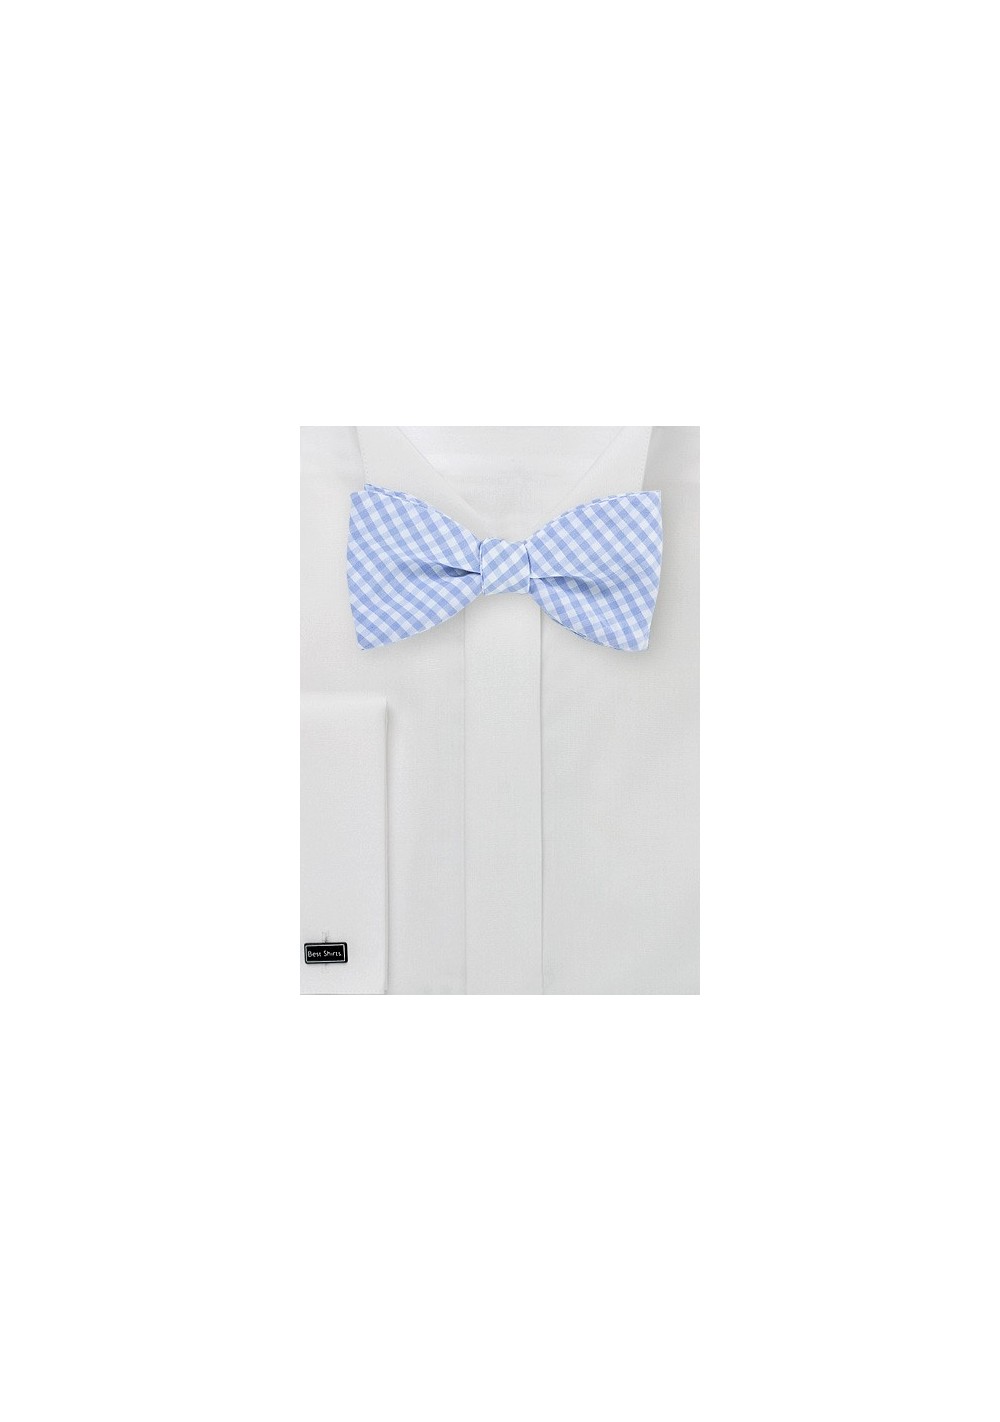 Light Blue Cotton Bow Tie with Micro Checks